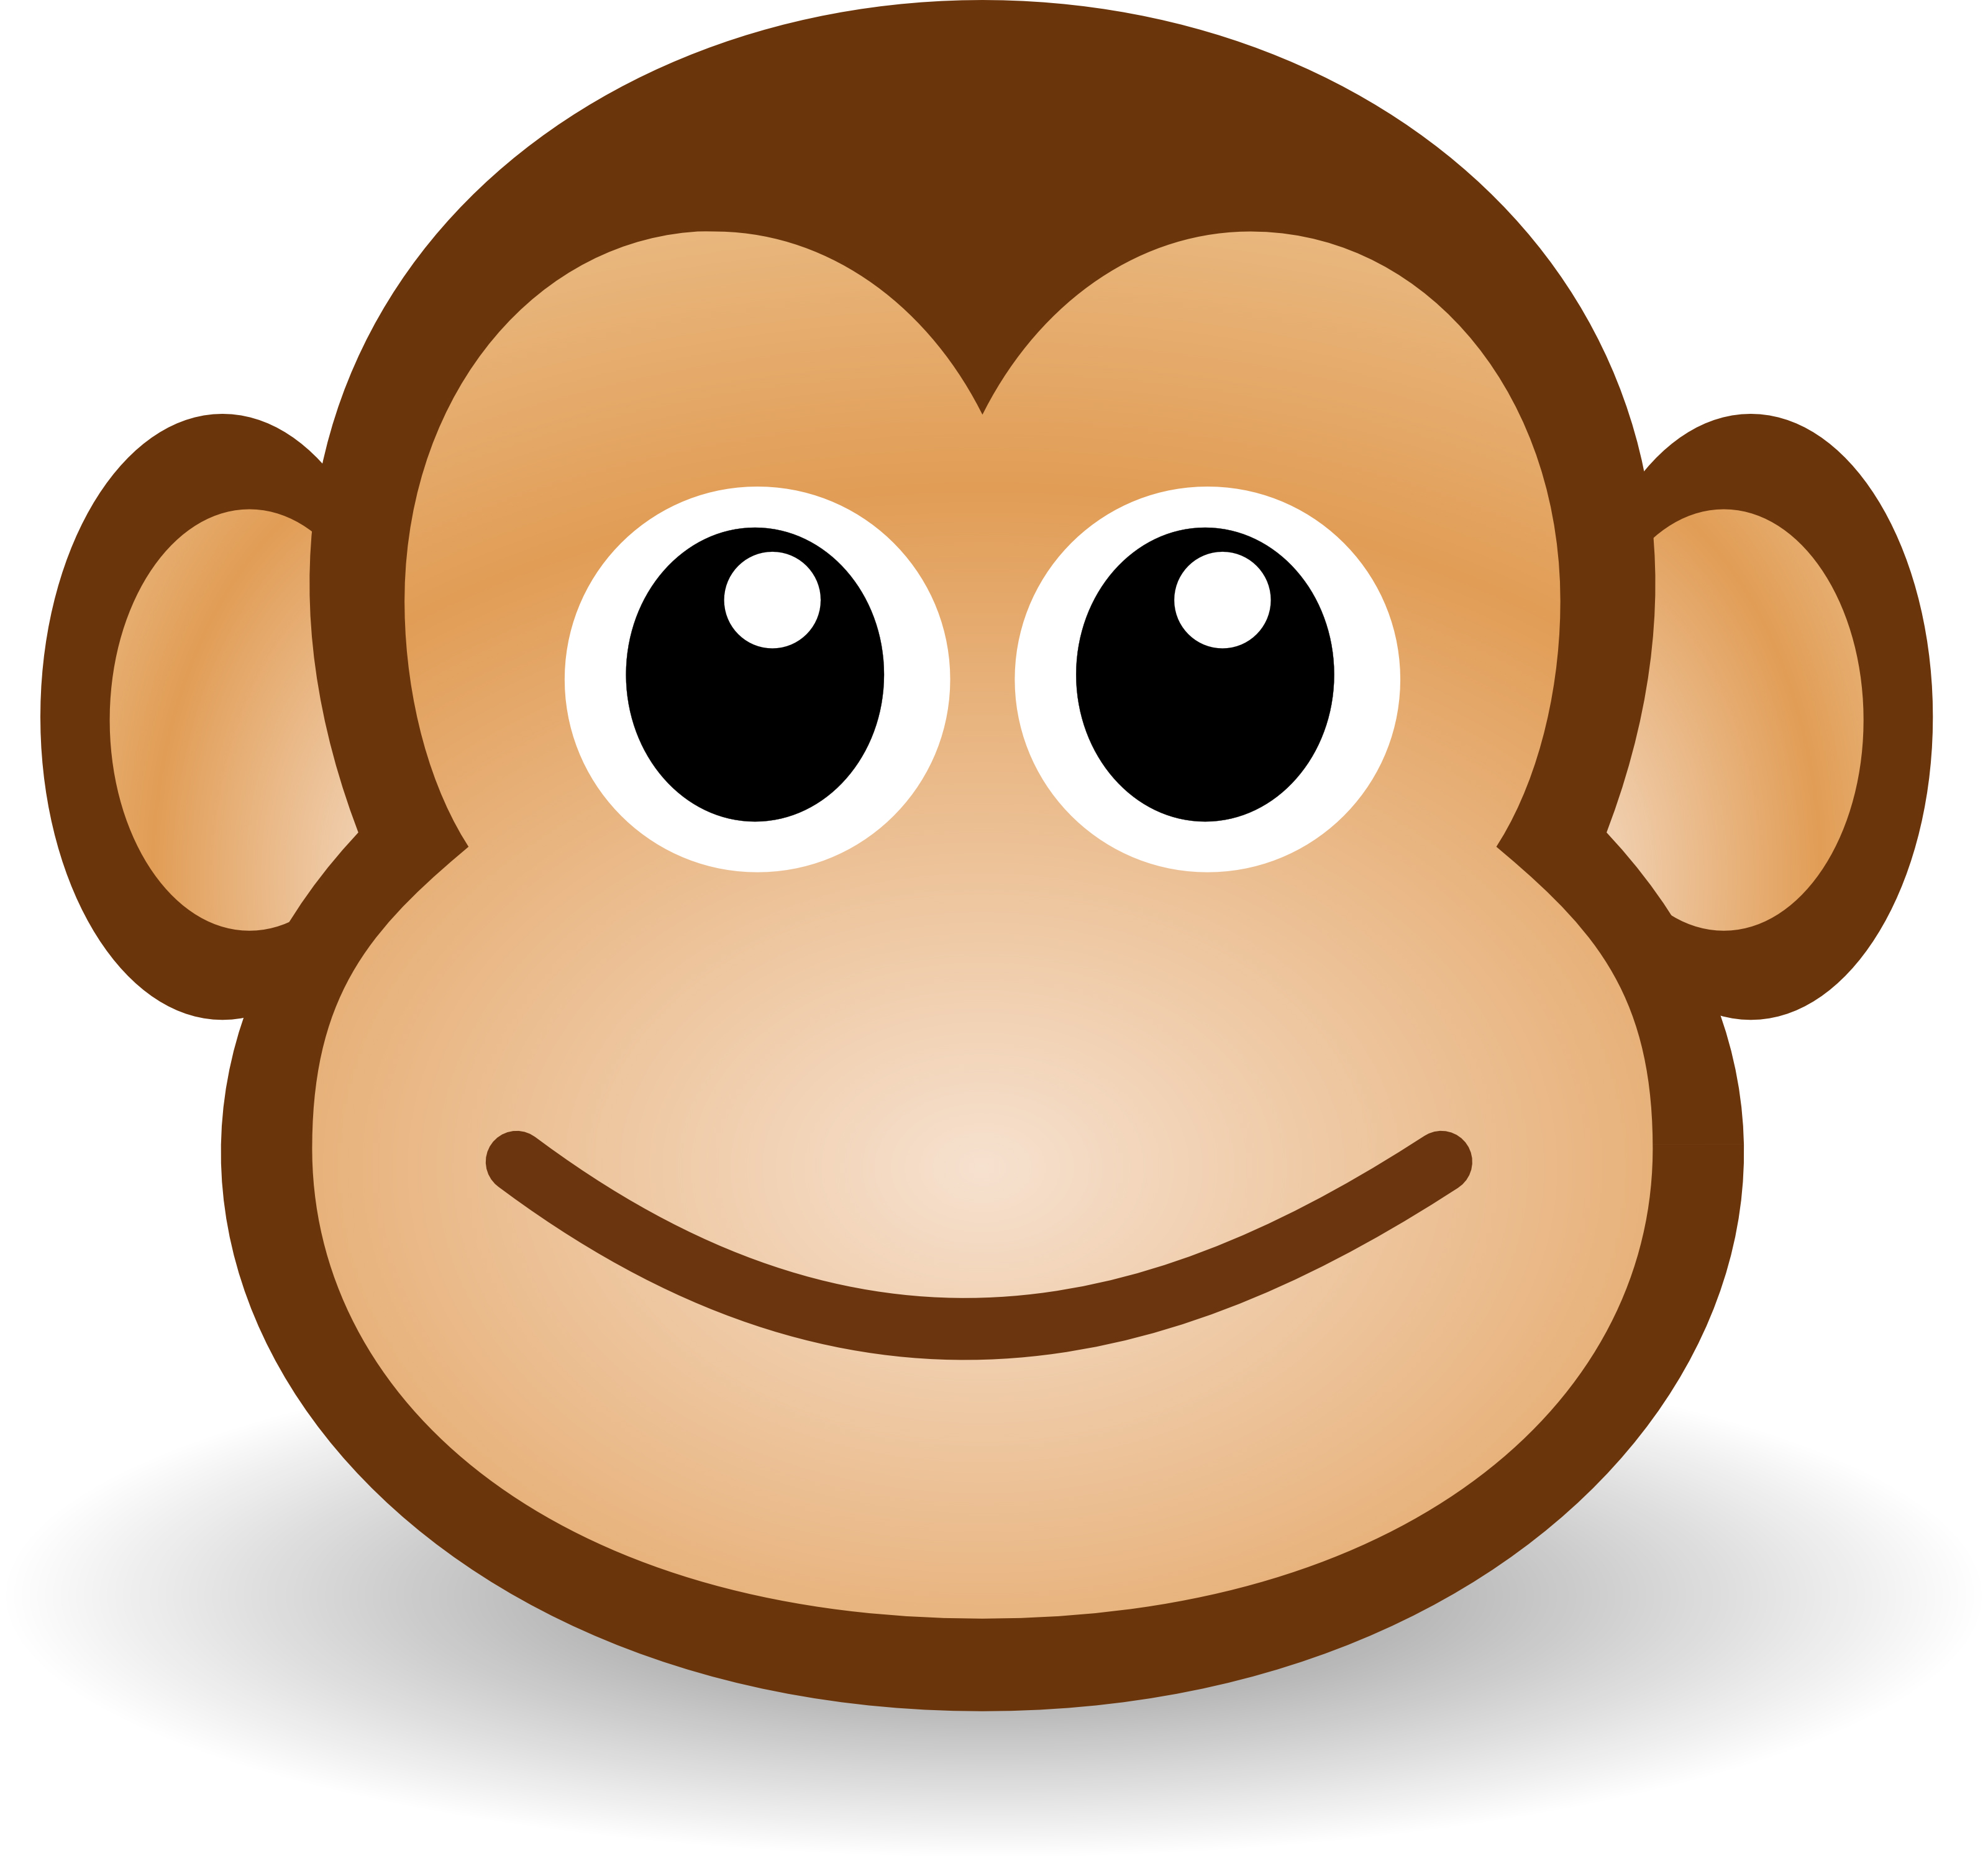 Free Cartoon Image Of Monkey, Download Free Clip Art, Free